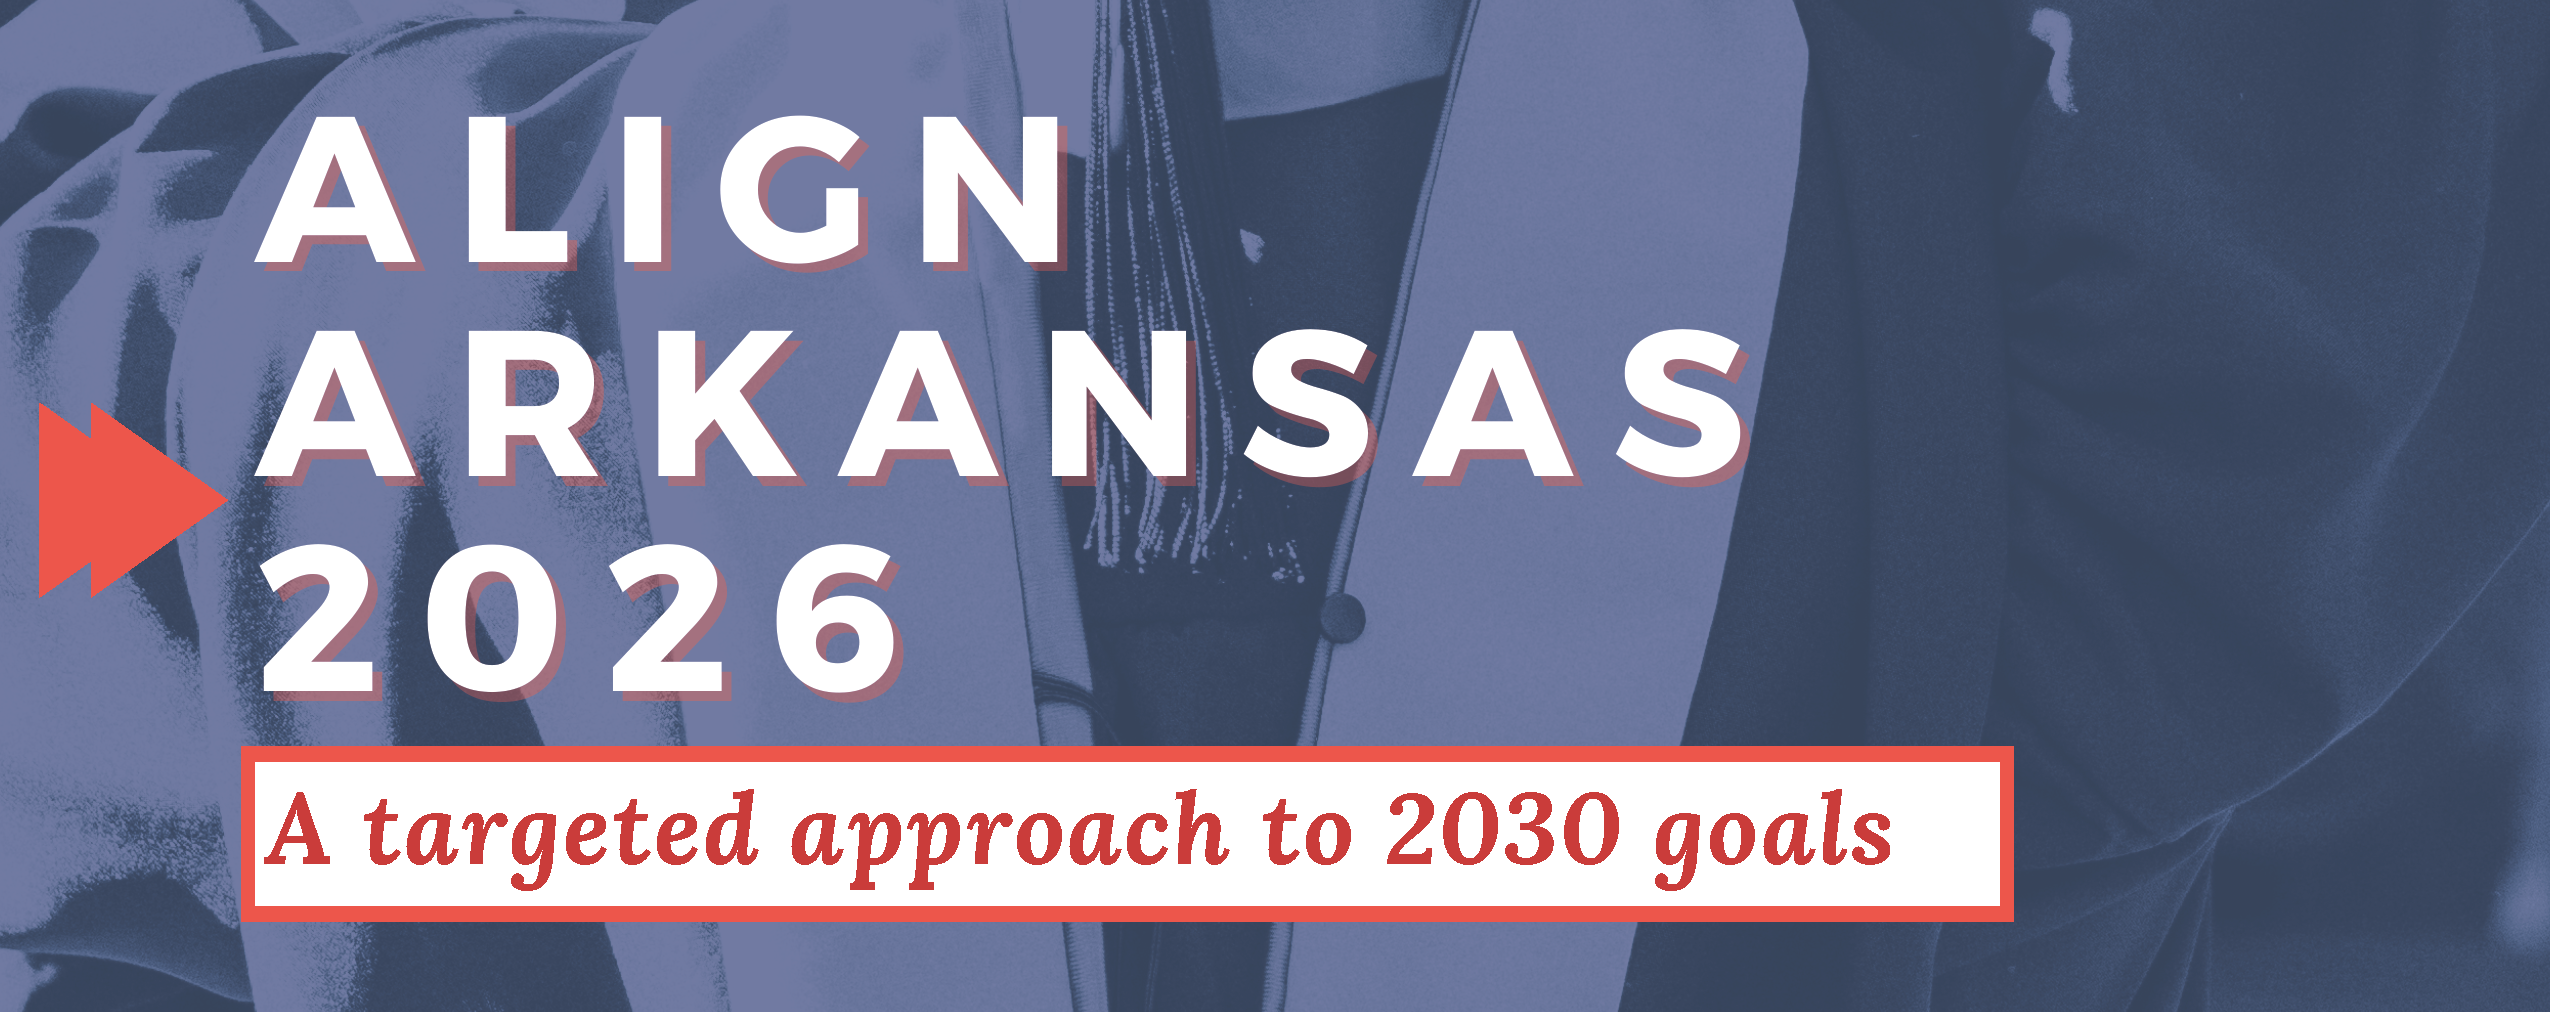 Align Arkansas 2026: A targeted approach to 2030 goals